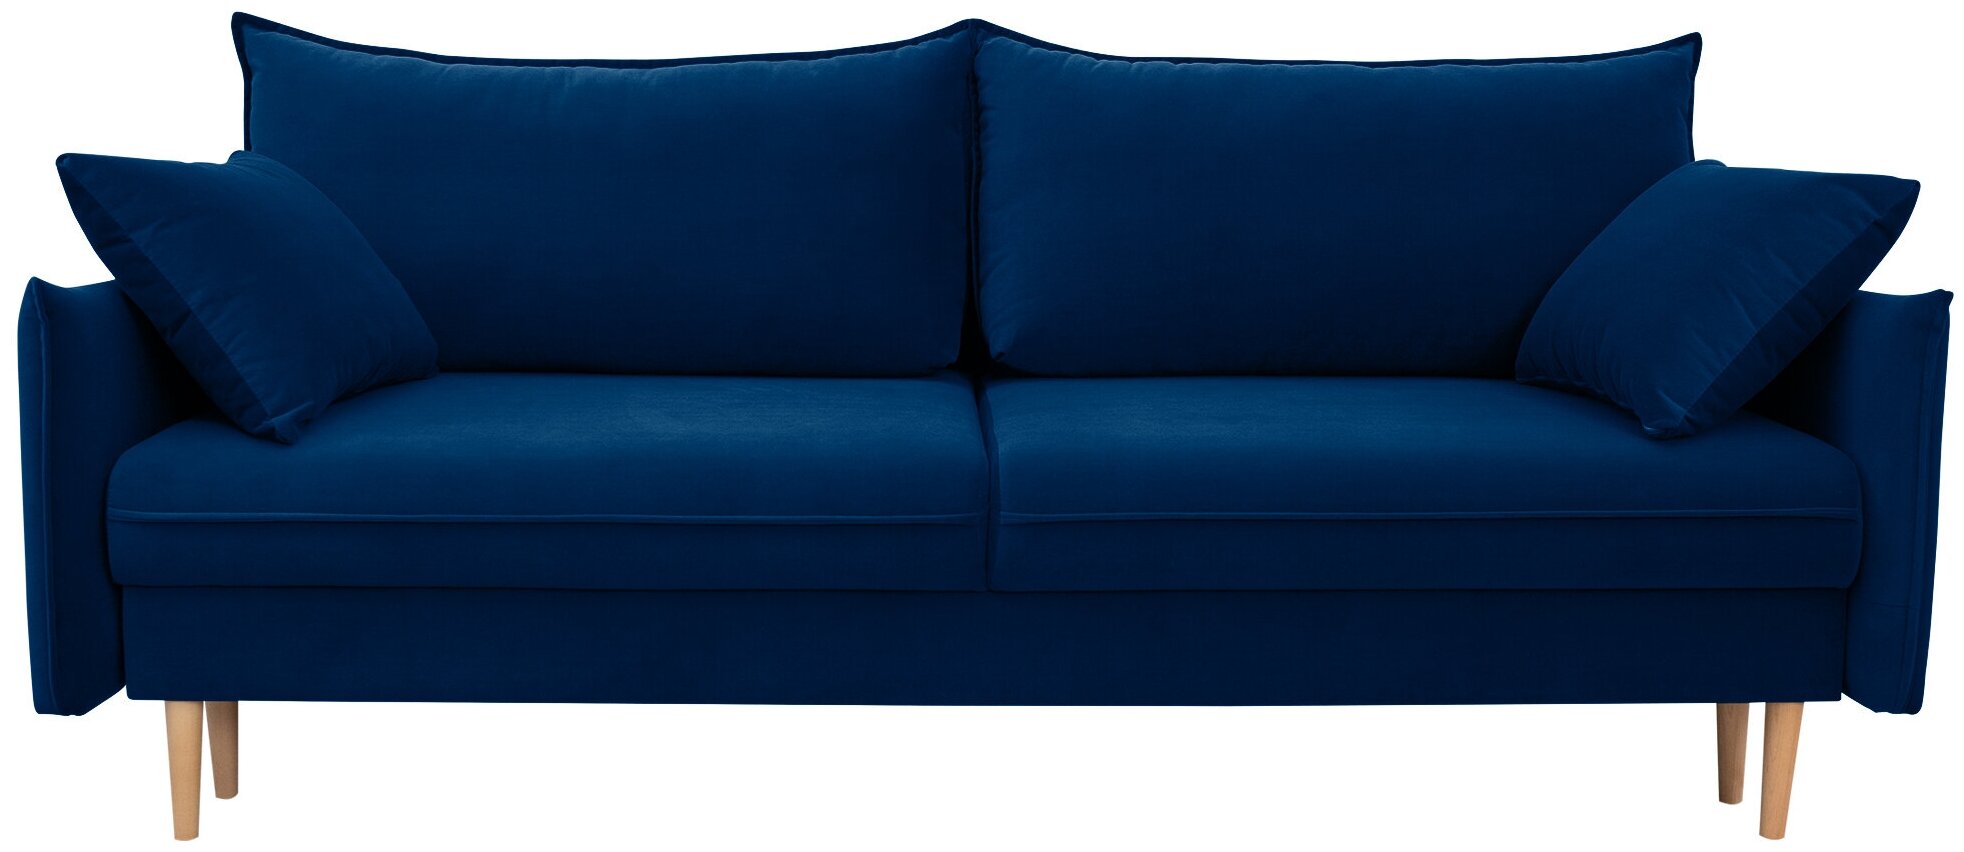 Диван-кровать Фьорд синий, механизм Тик-так, 212х96х80 см, Спальное место 147х198 см